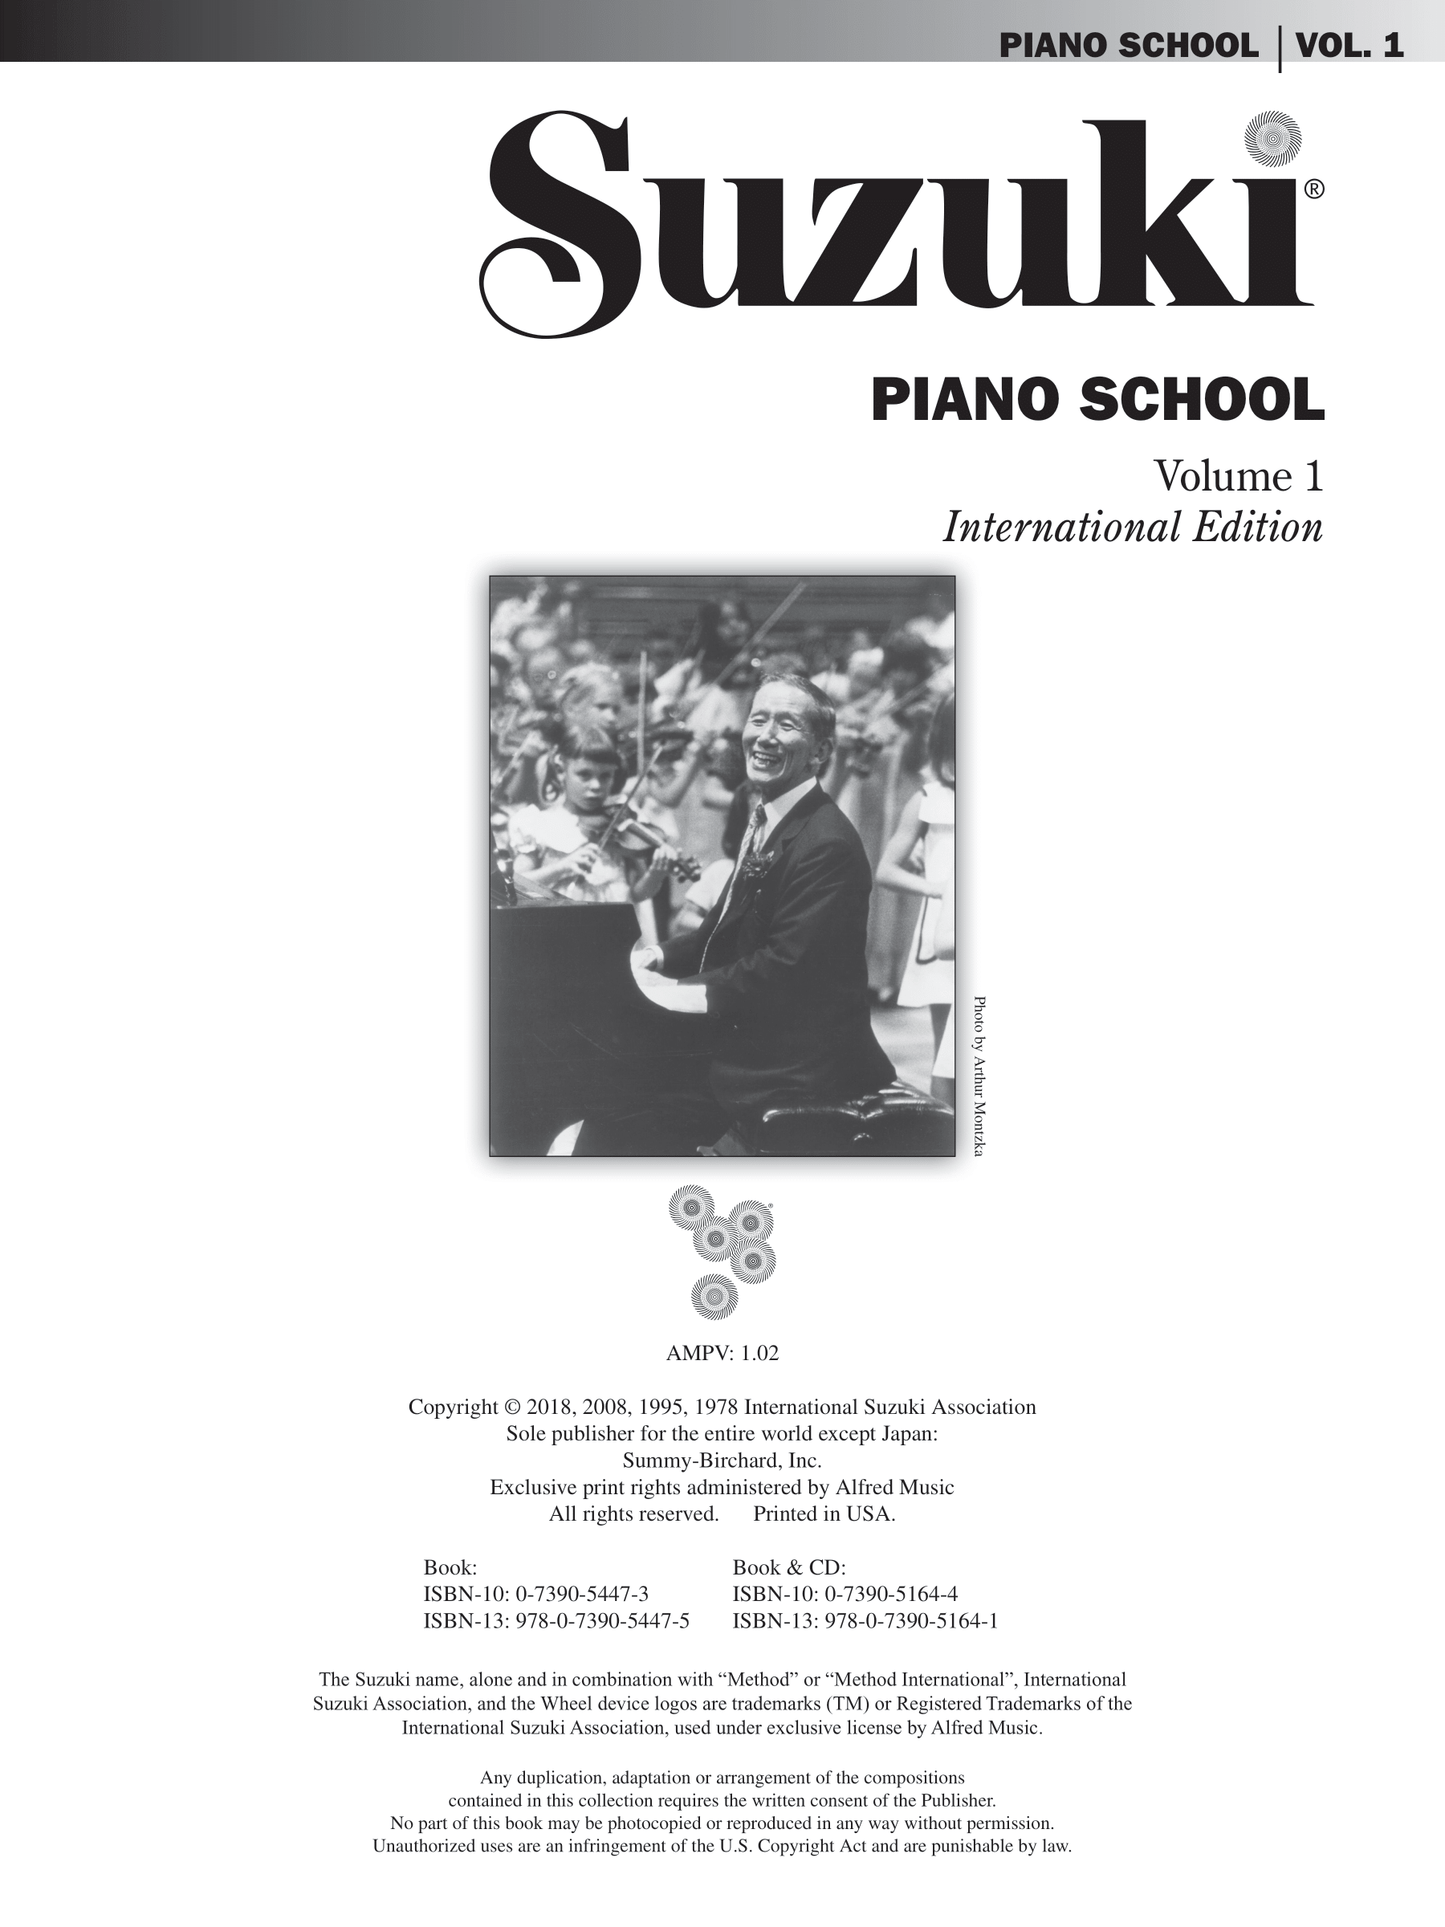 Suzuki Piano School - Volume 1 Book/Cd (International Edition)